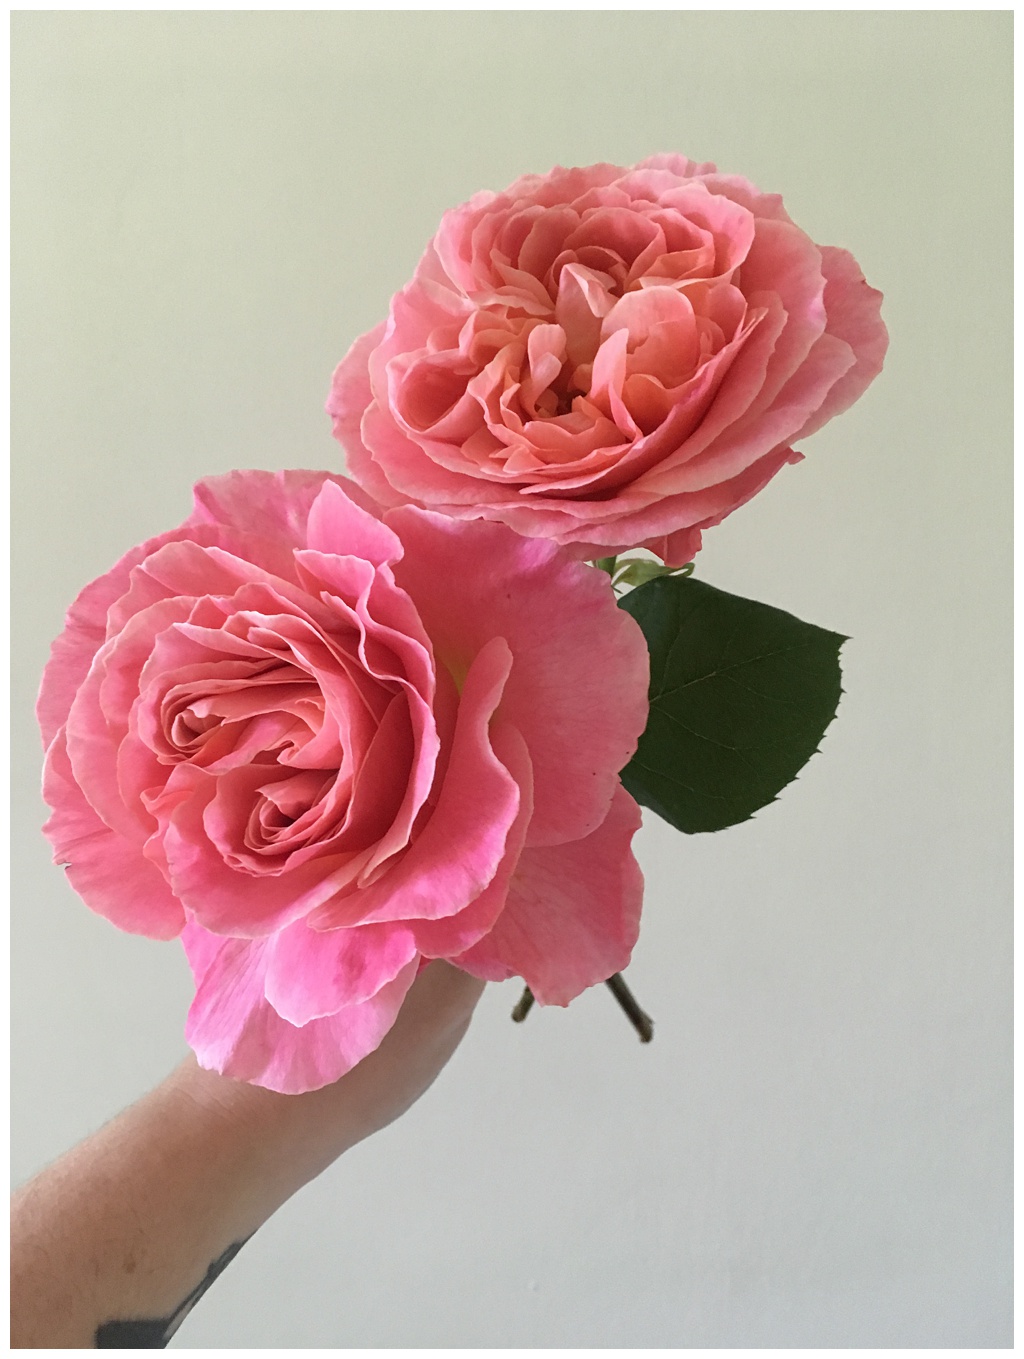 Seattle Wedding Florist Carolyn Kulb holding pink garden roses